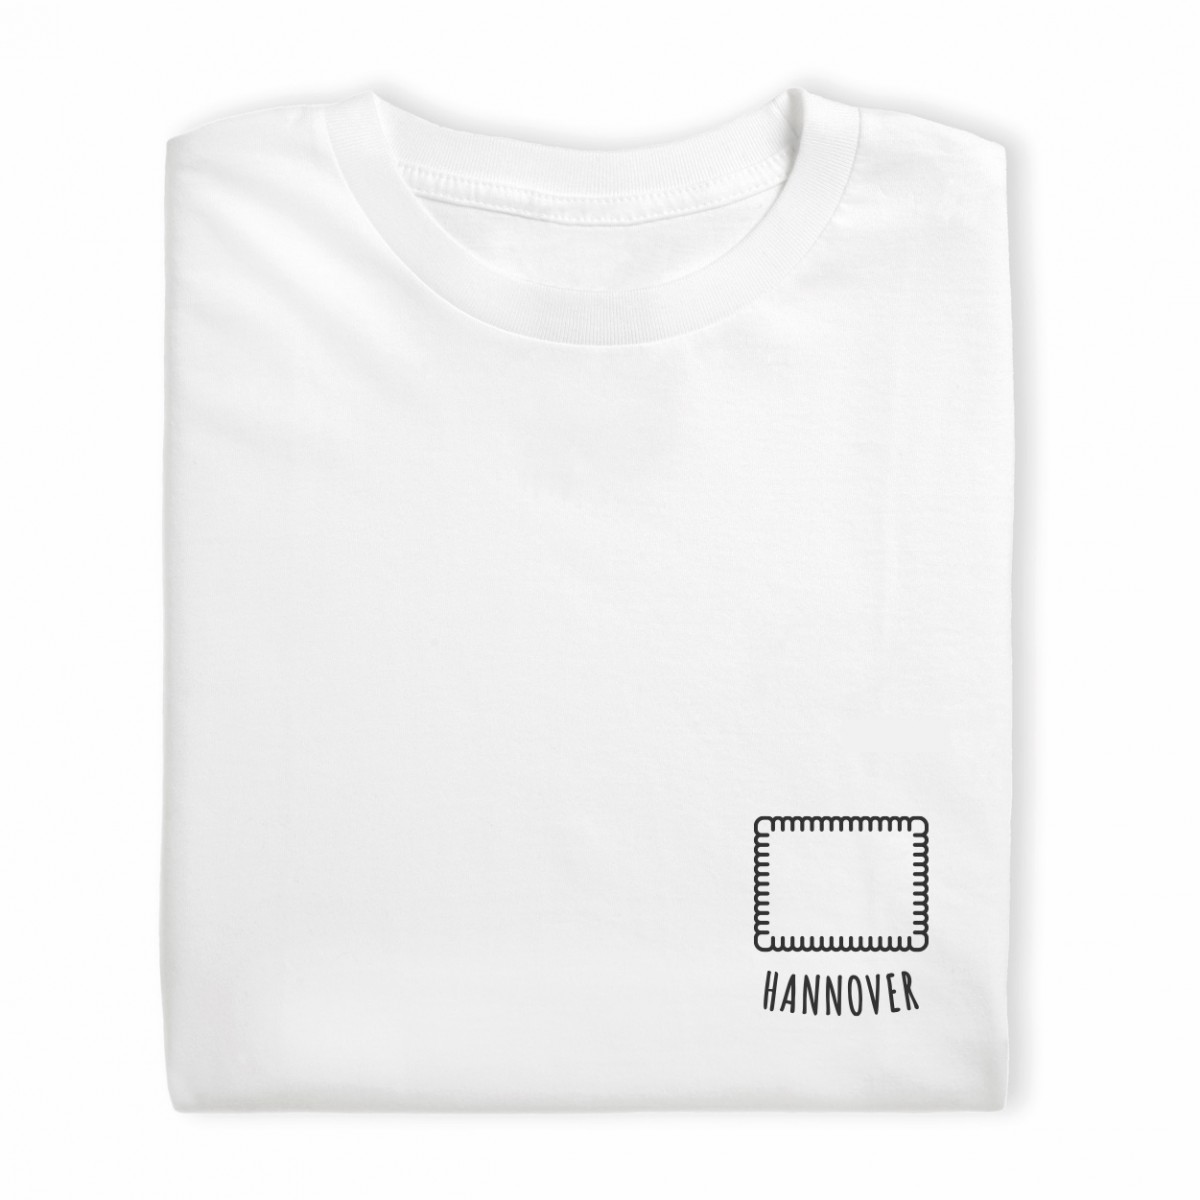 Charles / Shirt Hannover / 100% Biobaumwolle / Fair Wear zertifiziert 